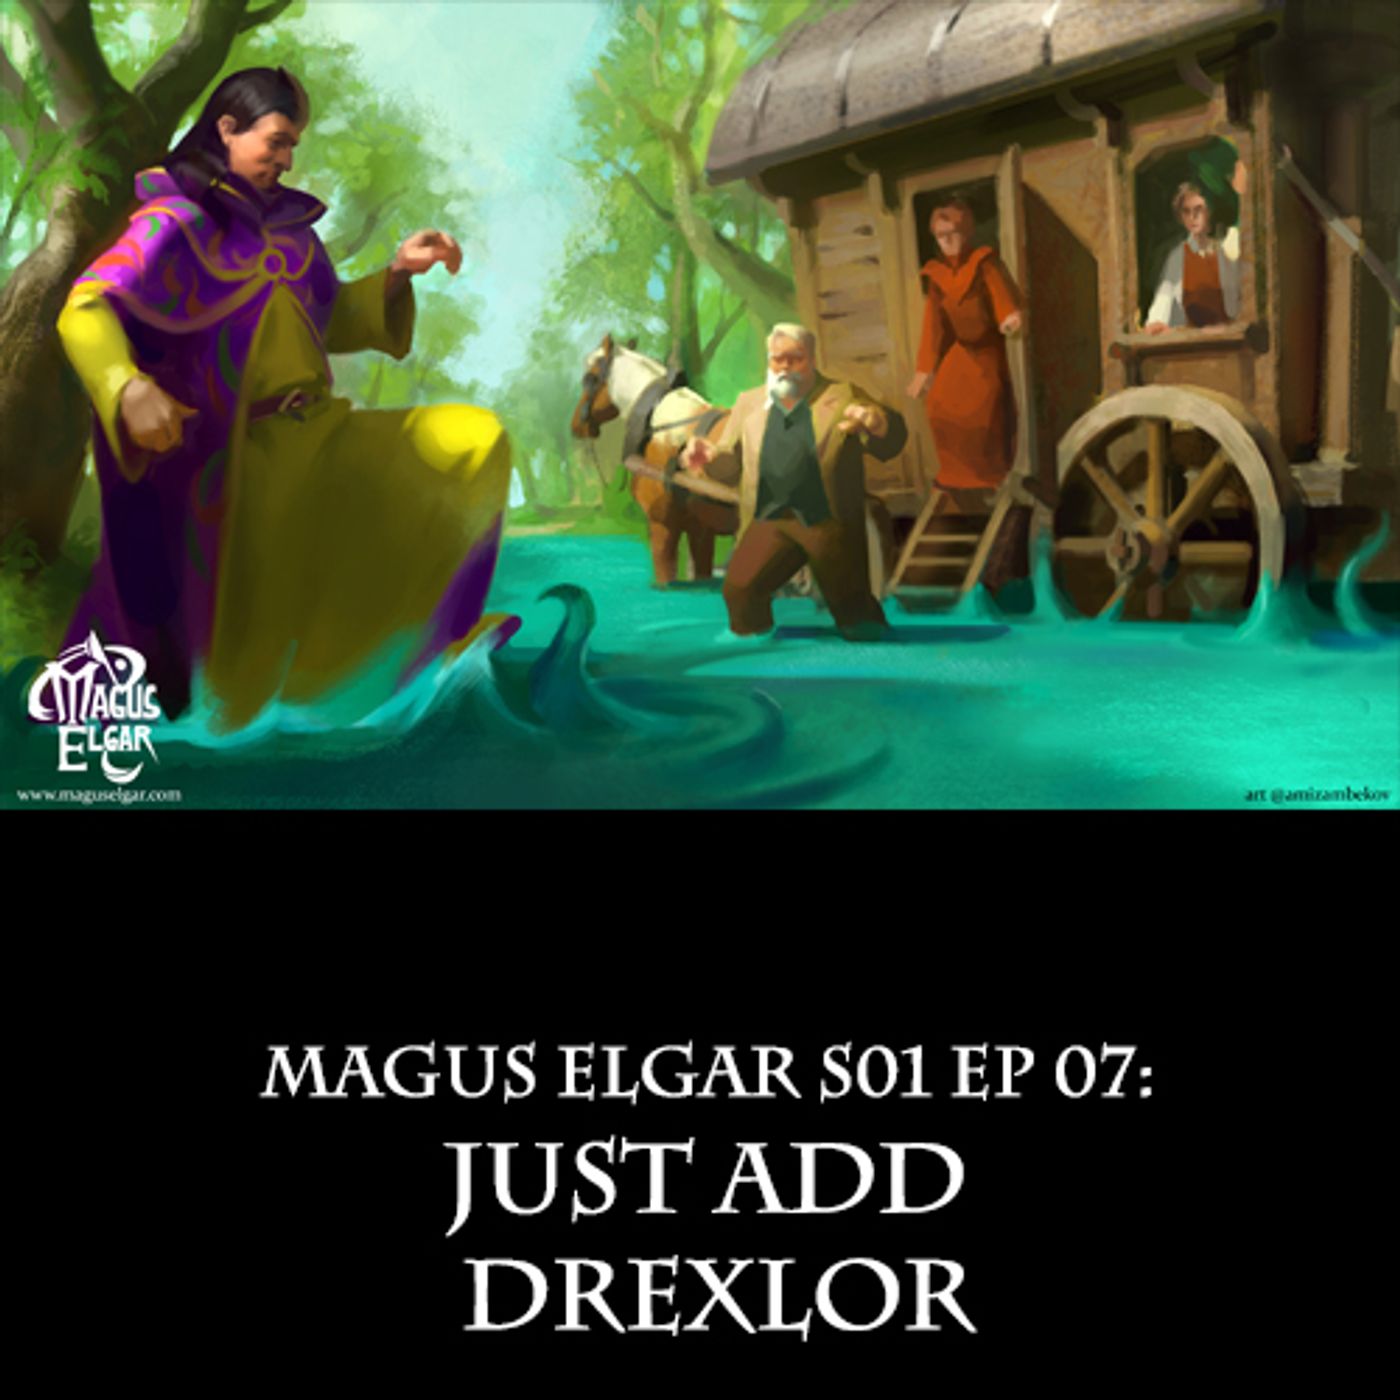 Magus Elgar S01 Ep 07: Just Add Drexlor